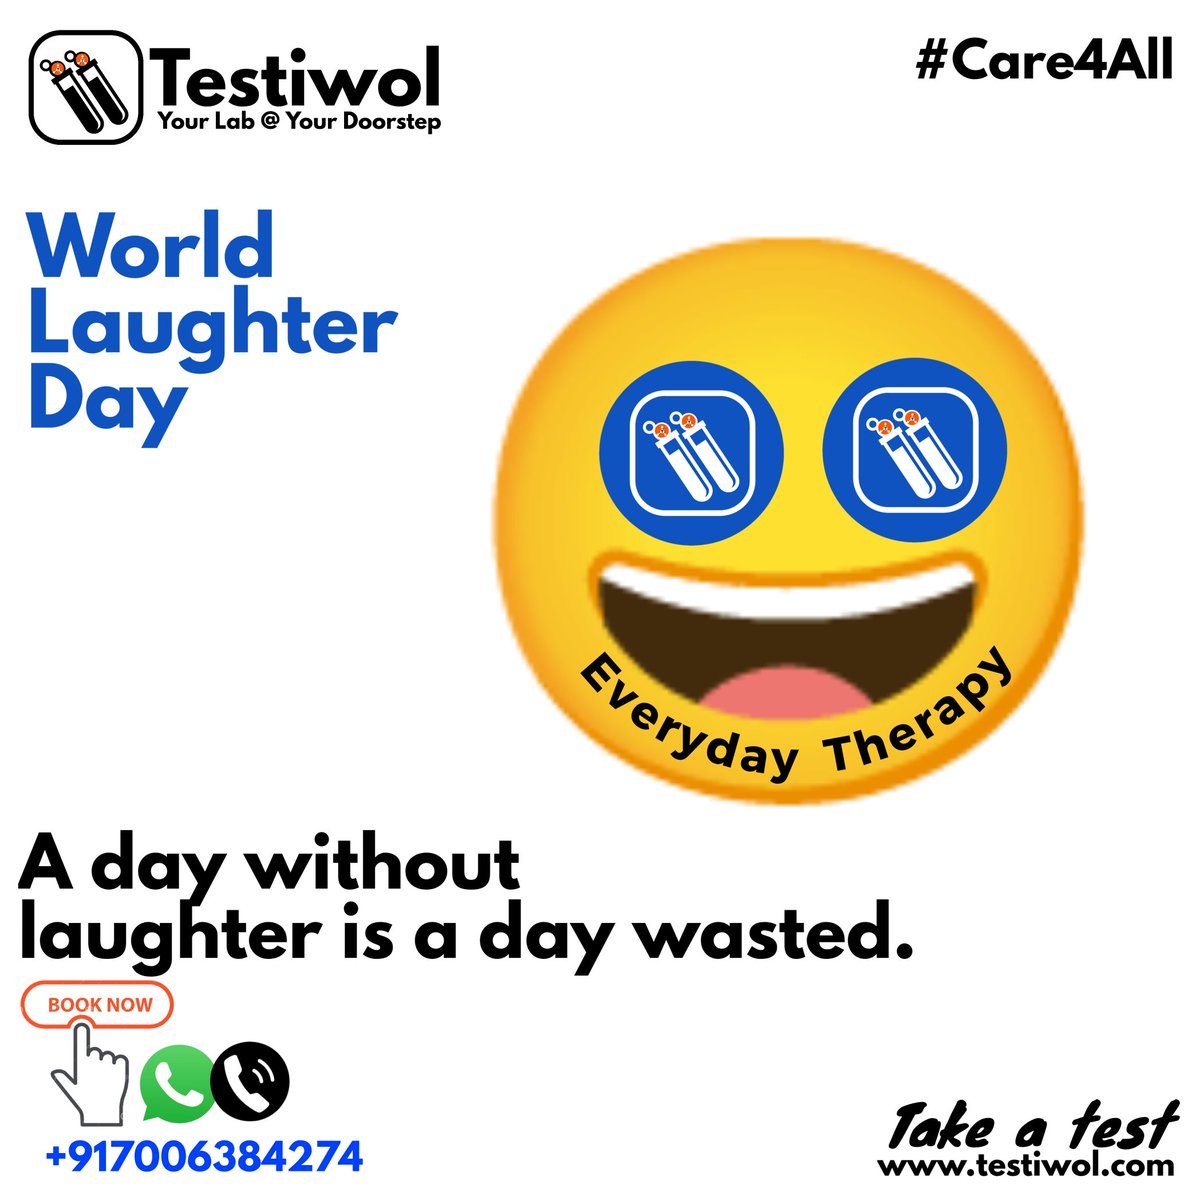 World Laughter Day
#laugh #laughter #laughterday
#testiwol #yourlabatyourdoorstep #Health #india #care #care4all #healthylifestyle #Healthykashmir #pathologyindia #ramadan #pathologykashmir #diagnostics #diagnosticservices #diagnosis #pathologybusinessinindia @testiwol